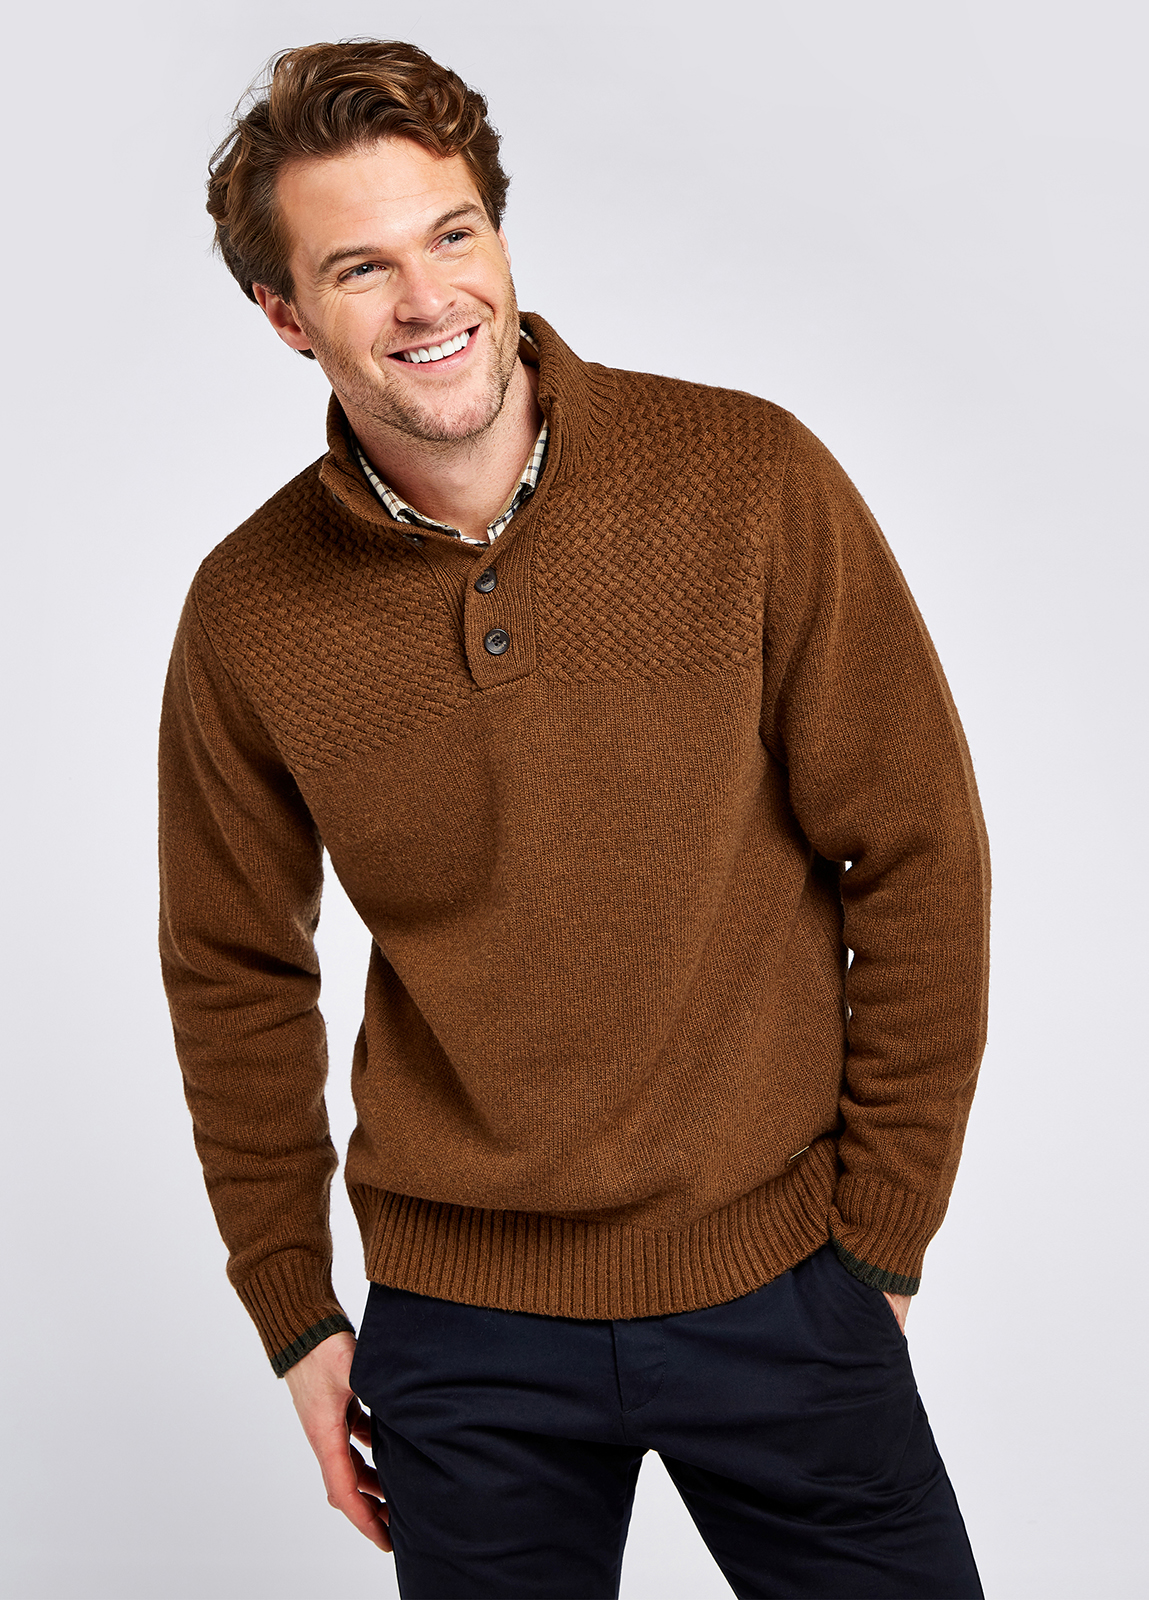 Roundwood Knitted Sweater - Nutmeg